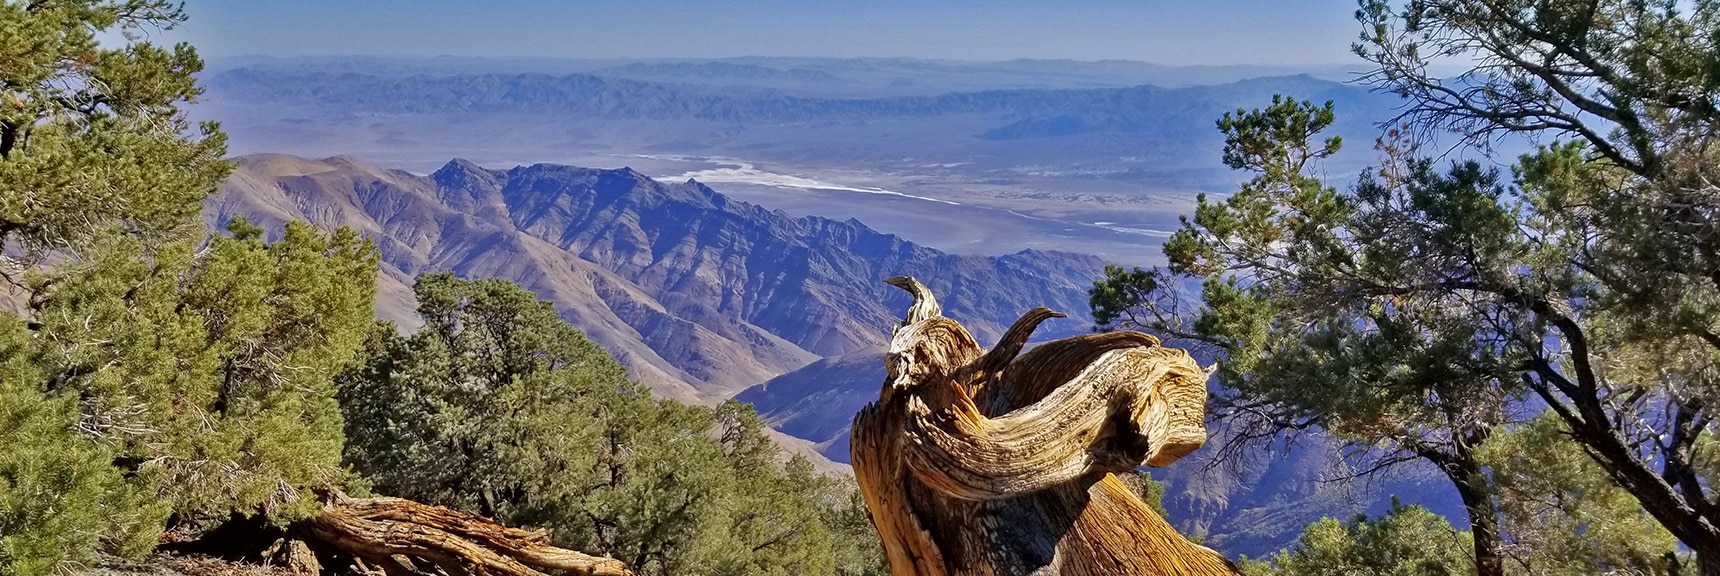 Death Valley Viewed from Wildrose Peak Final Summit Approach | Wildrose Peak | Panamint Mountain Range | Death Valley National Park, California